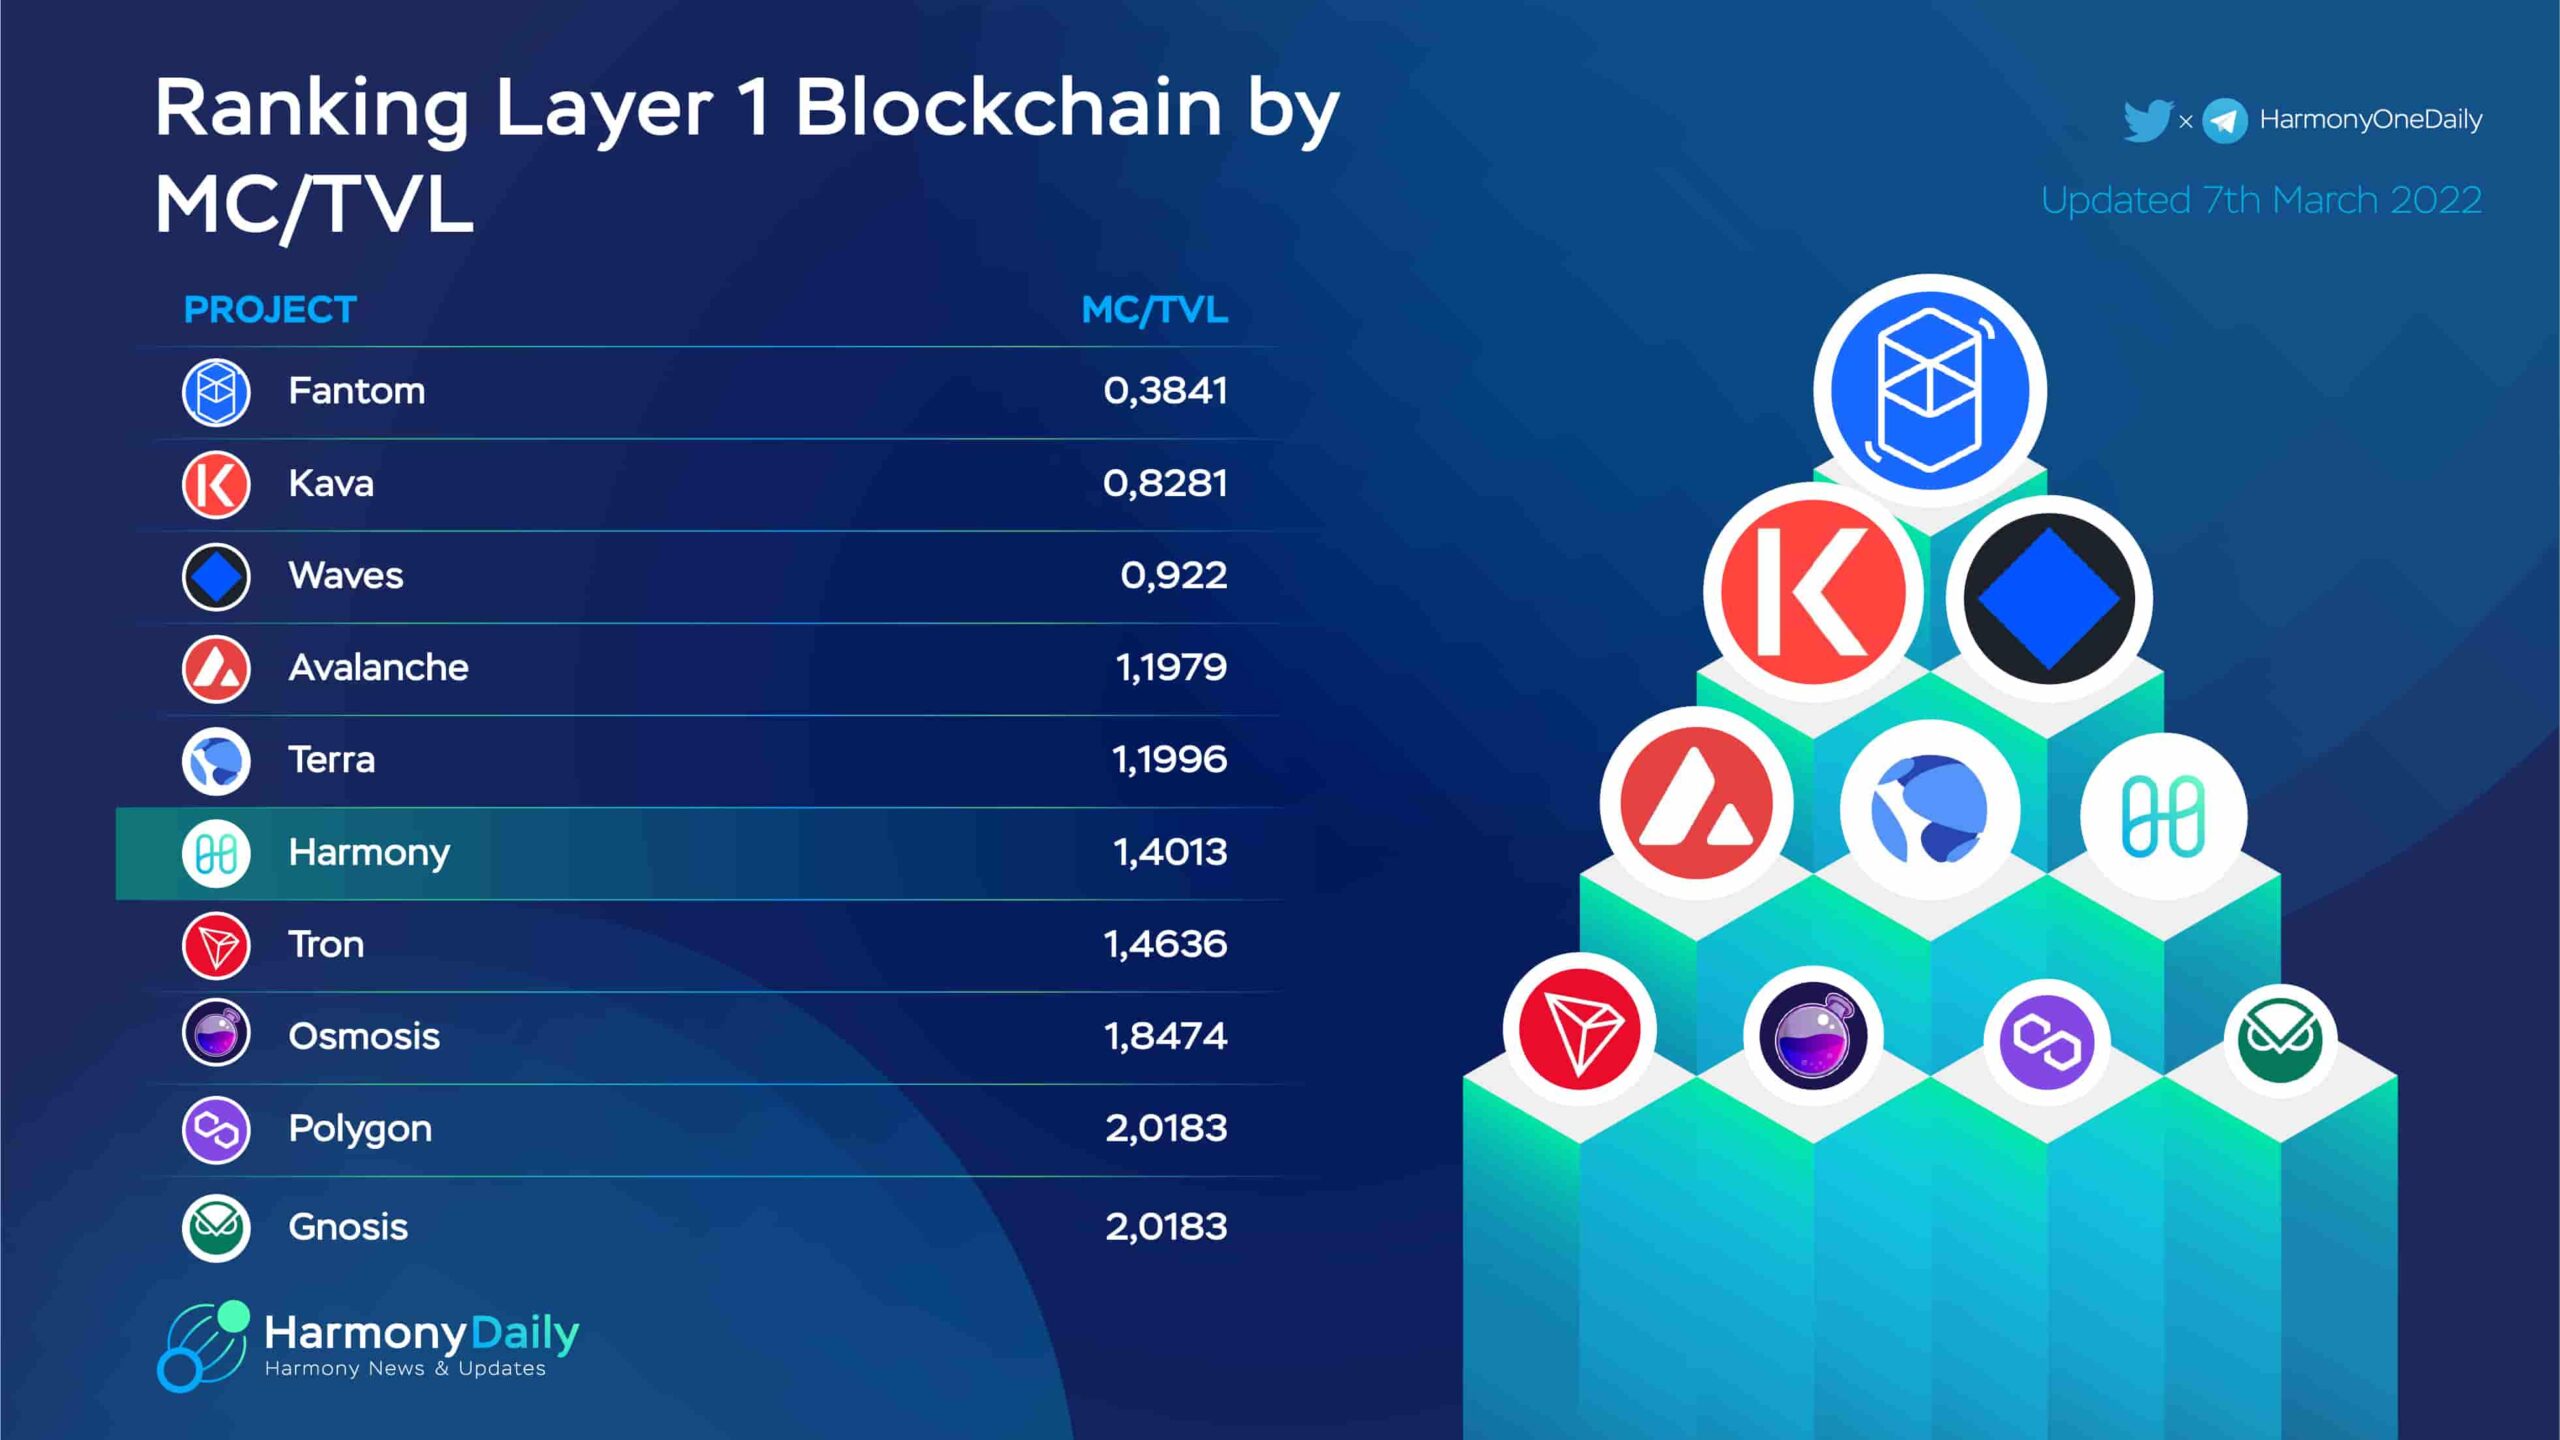 Ranking Layer 1 Blockchain by MC/TVL